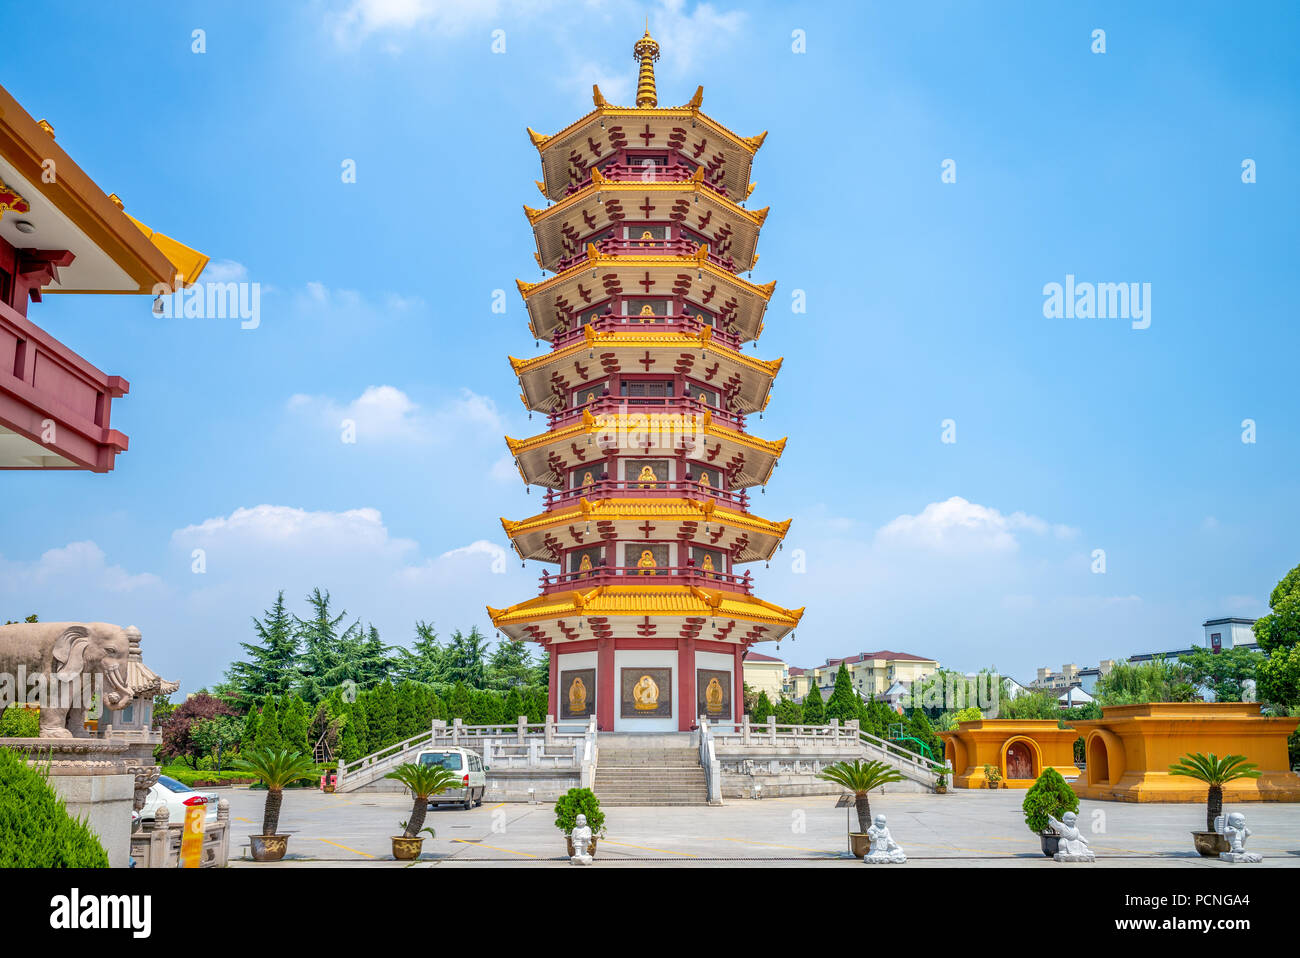 qibao temple at qibao ancient town in shanghai Stock Photo